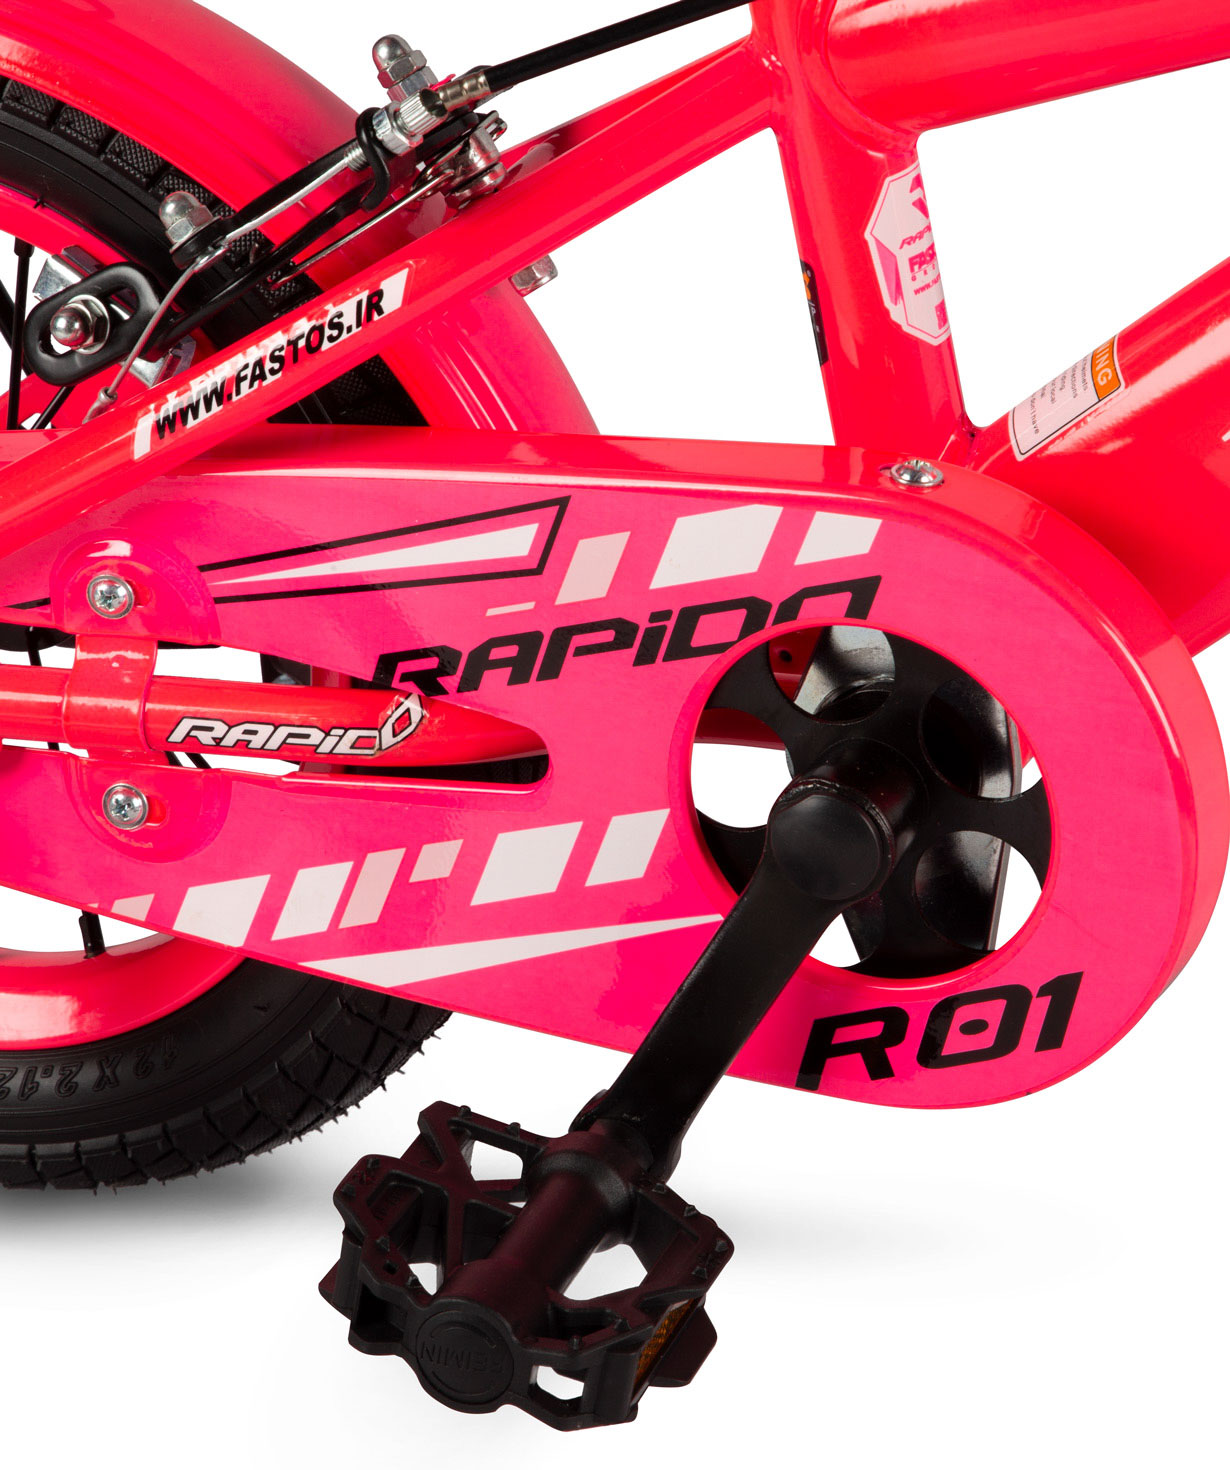 Bicycle `Rapido` 12-3R01